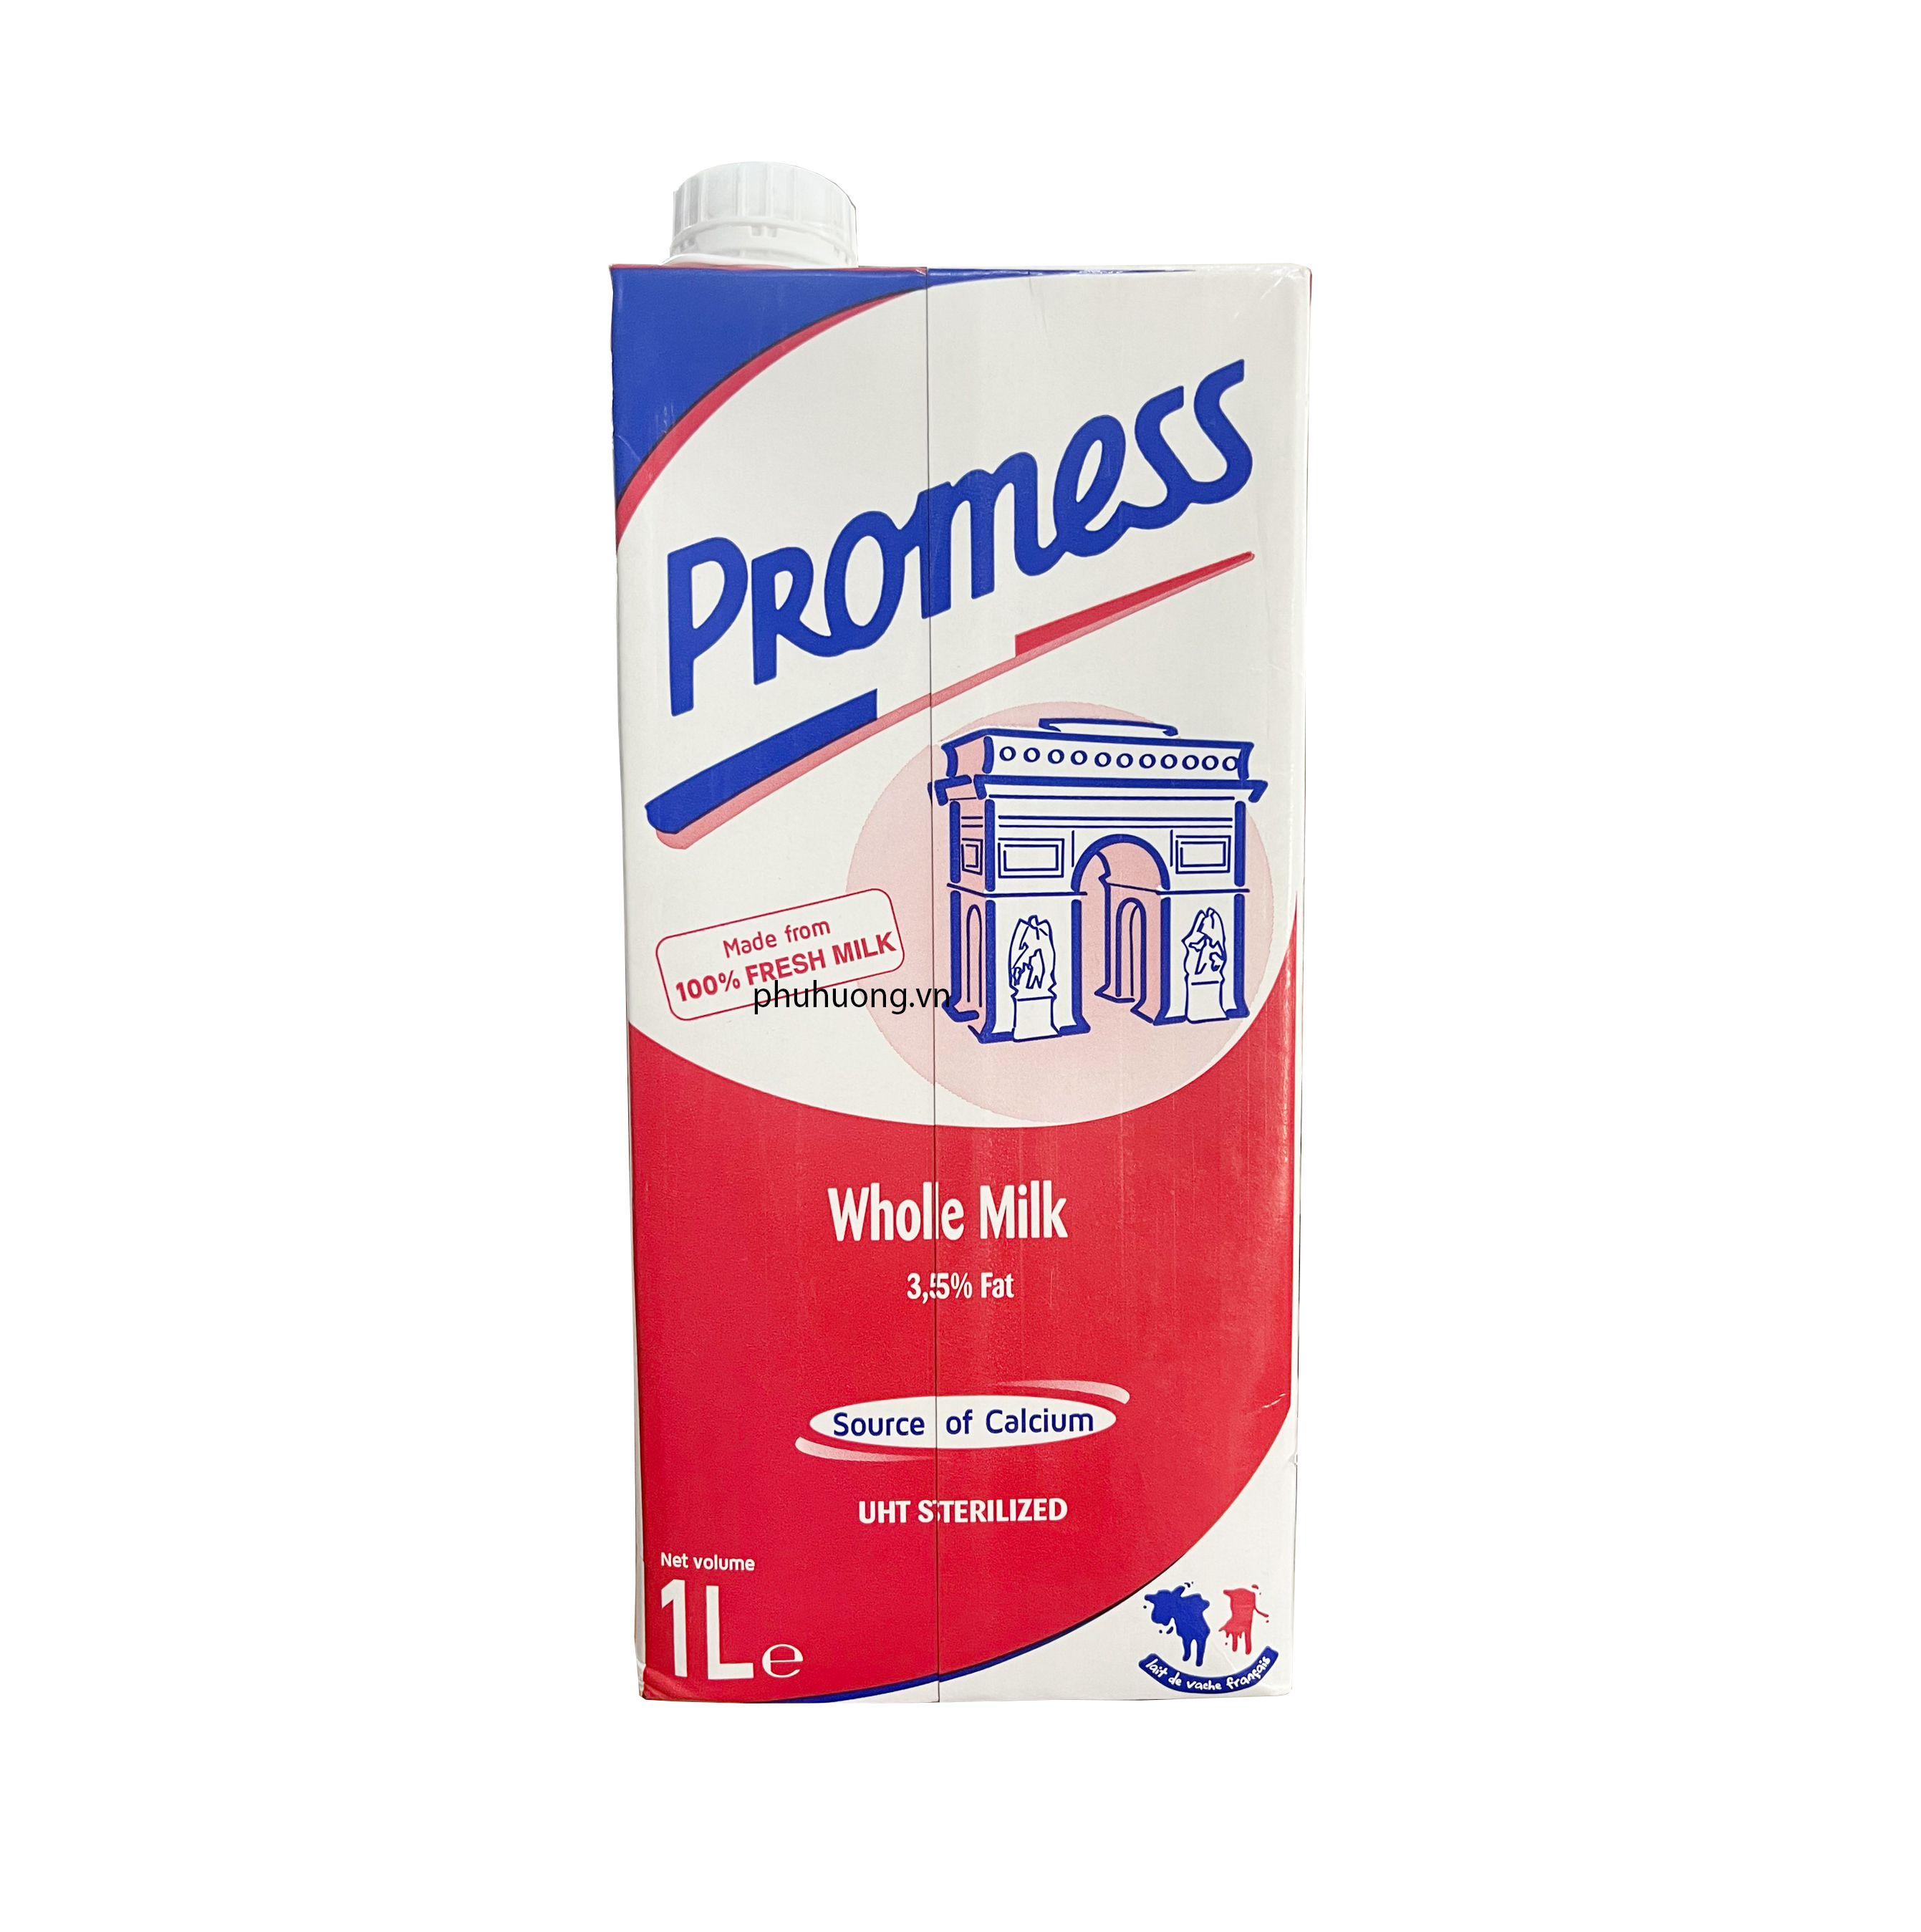 Sữa tươi Promess 1 lít